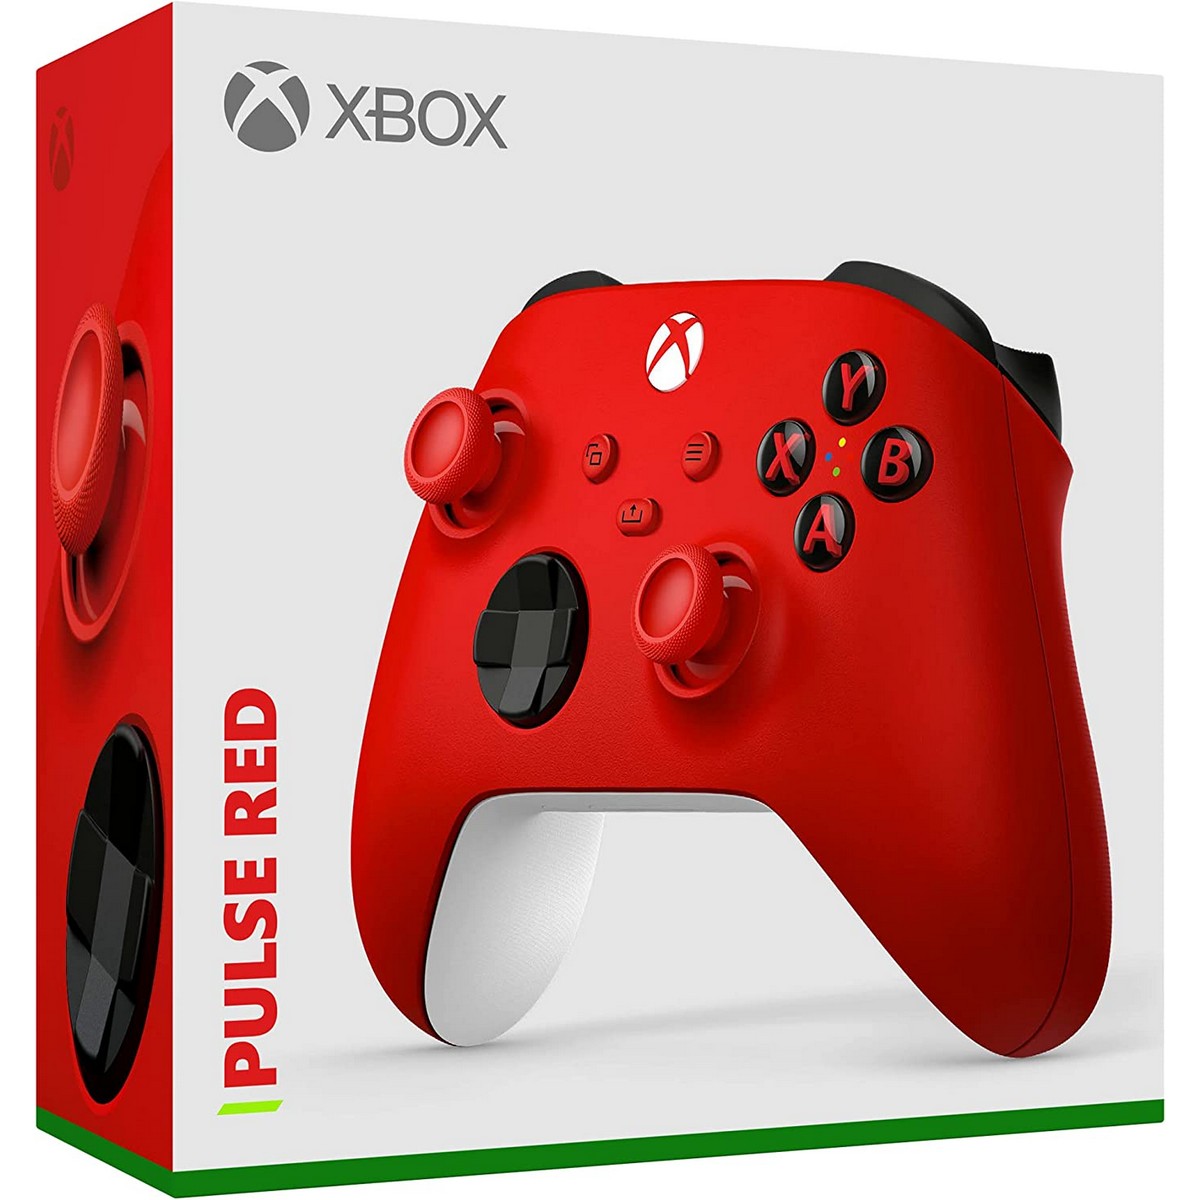 Microsoft - Microsoft Official Xbox Series X & S Wireless Controller - Red (XBOX/PC QAU-00012)